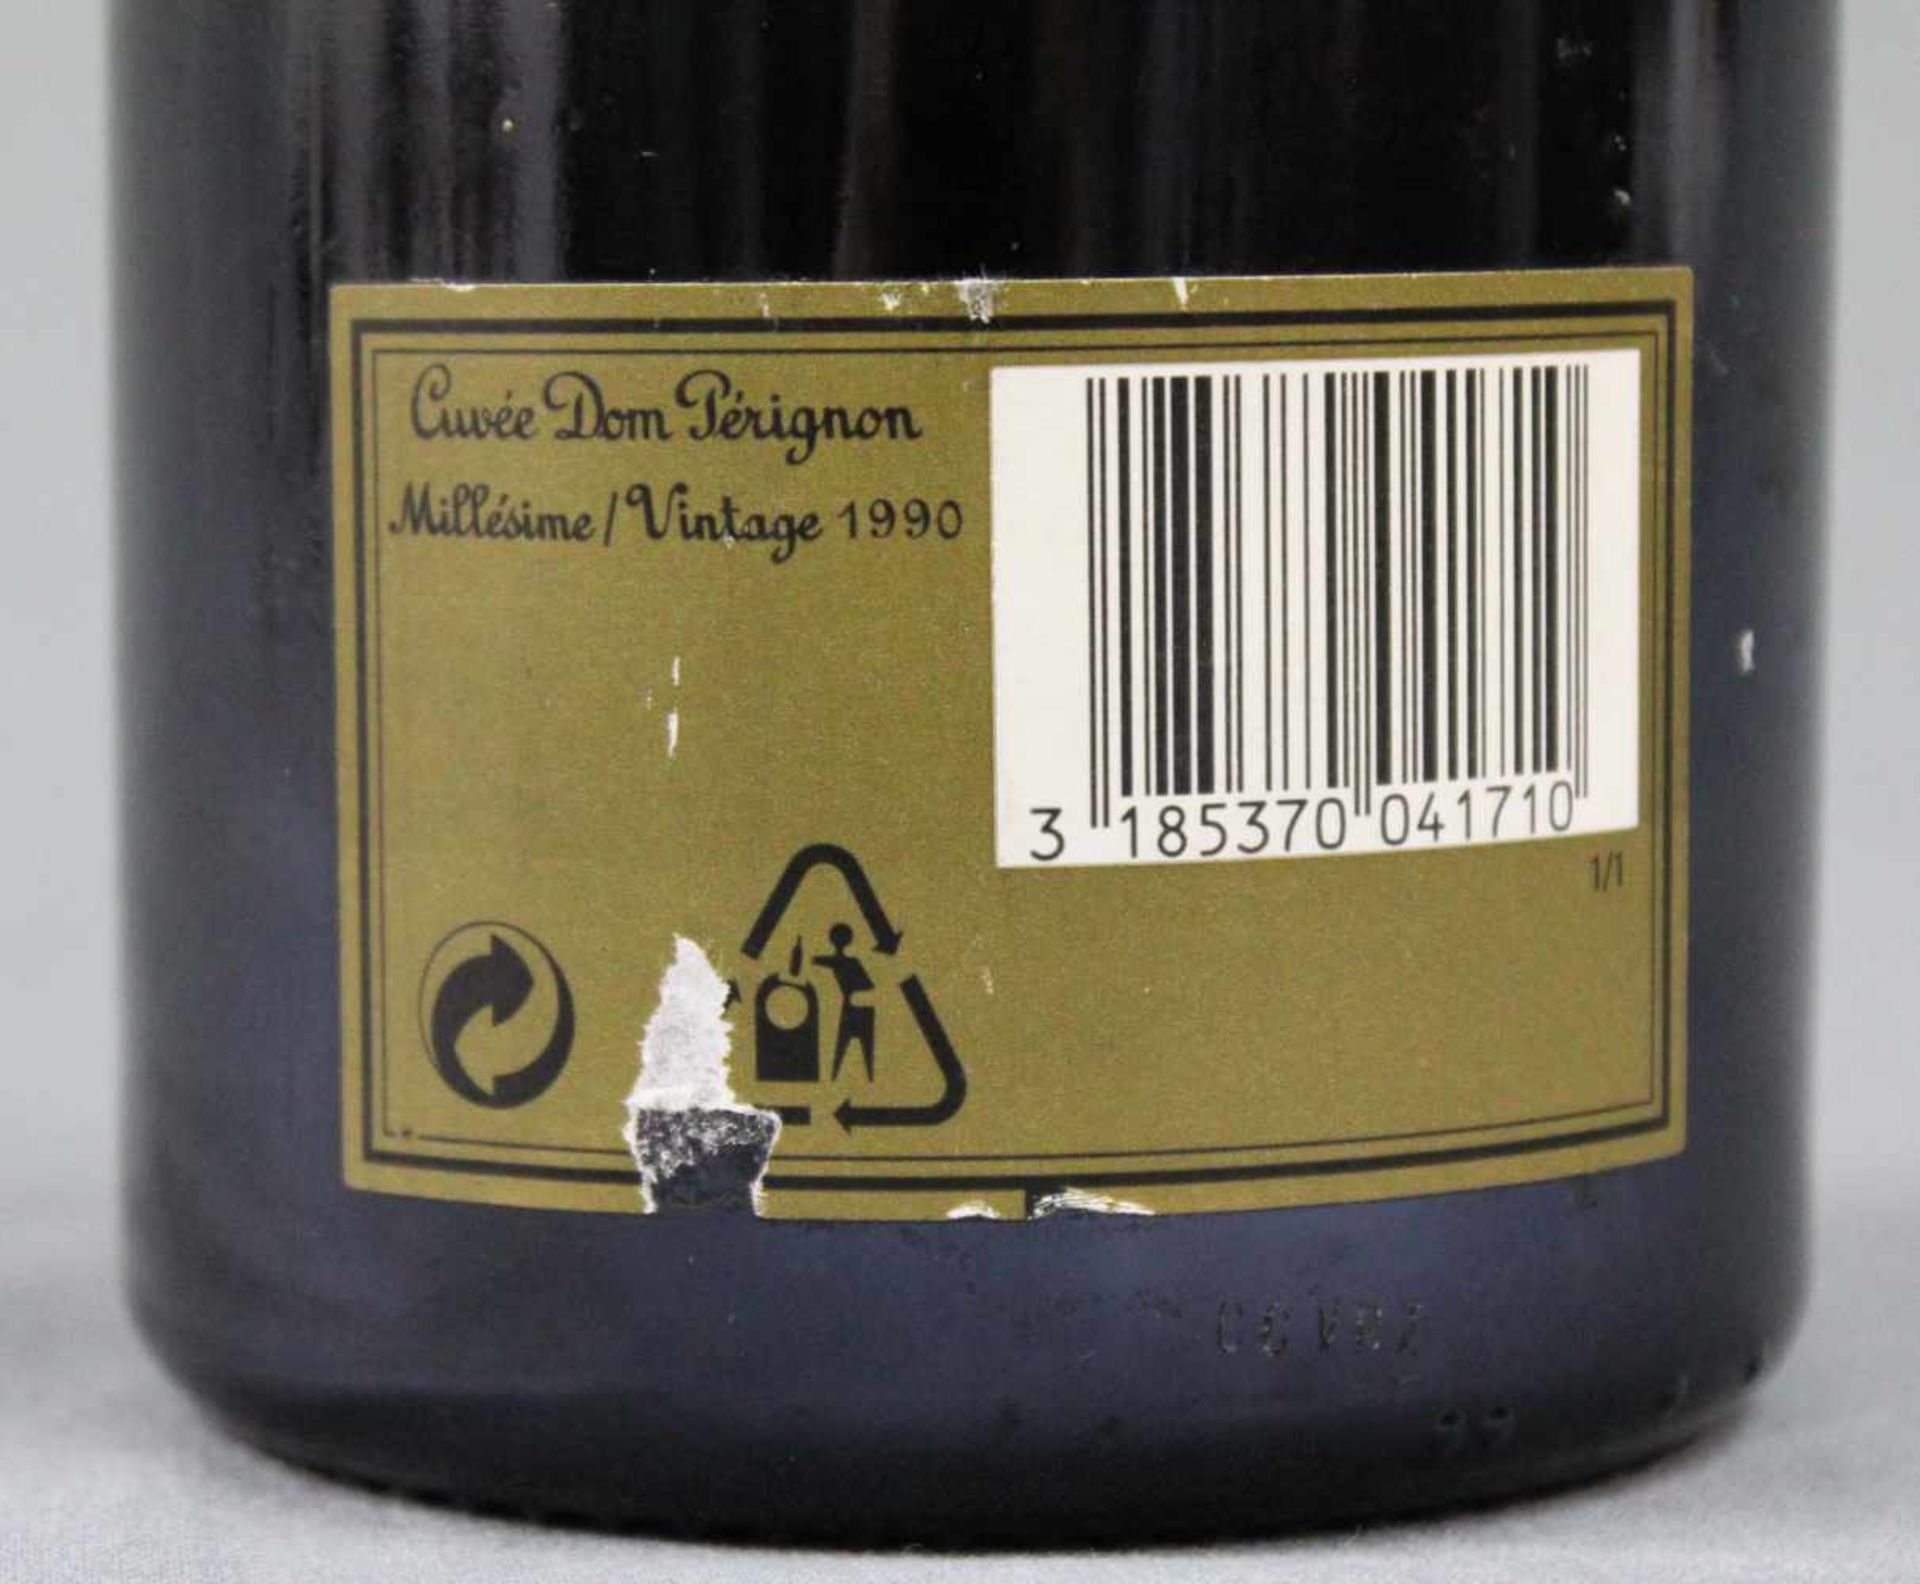 1990 Champagne. Cuvee Dom Perignon. Vintage.Moet et Chandon a Epernay. Fondee en 1743. Eine ganze - Bild 4 aus 8